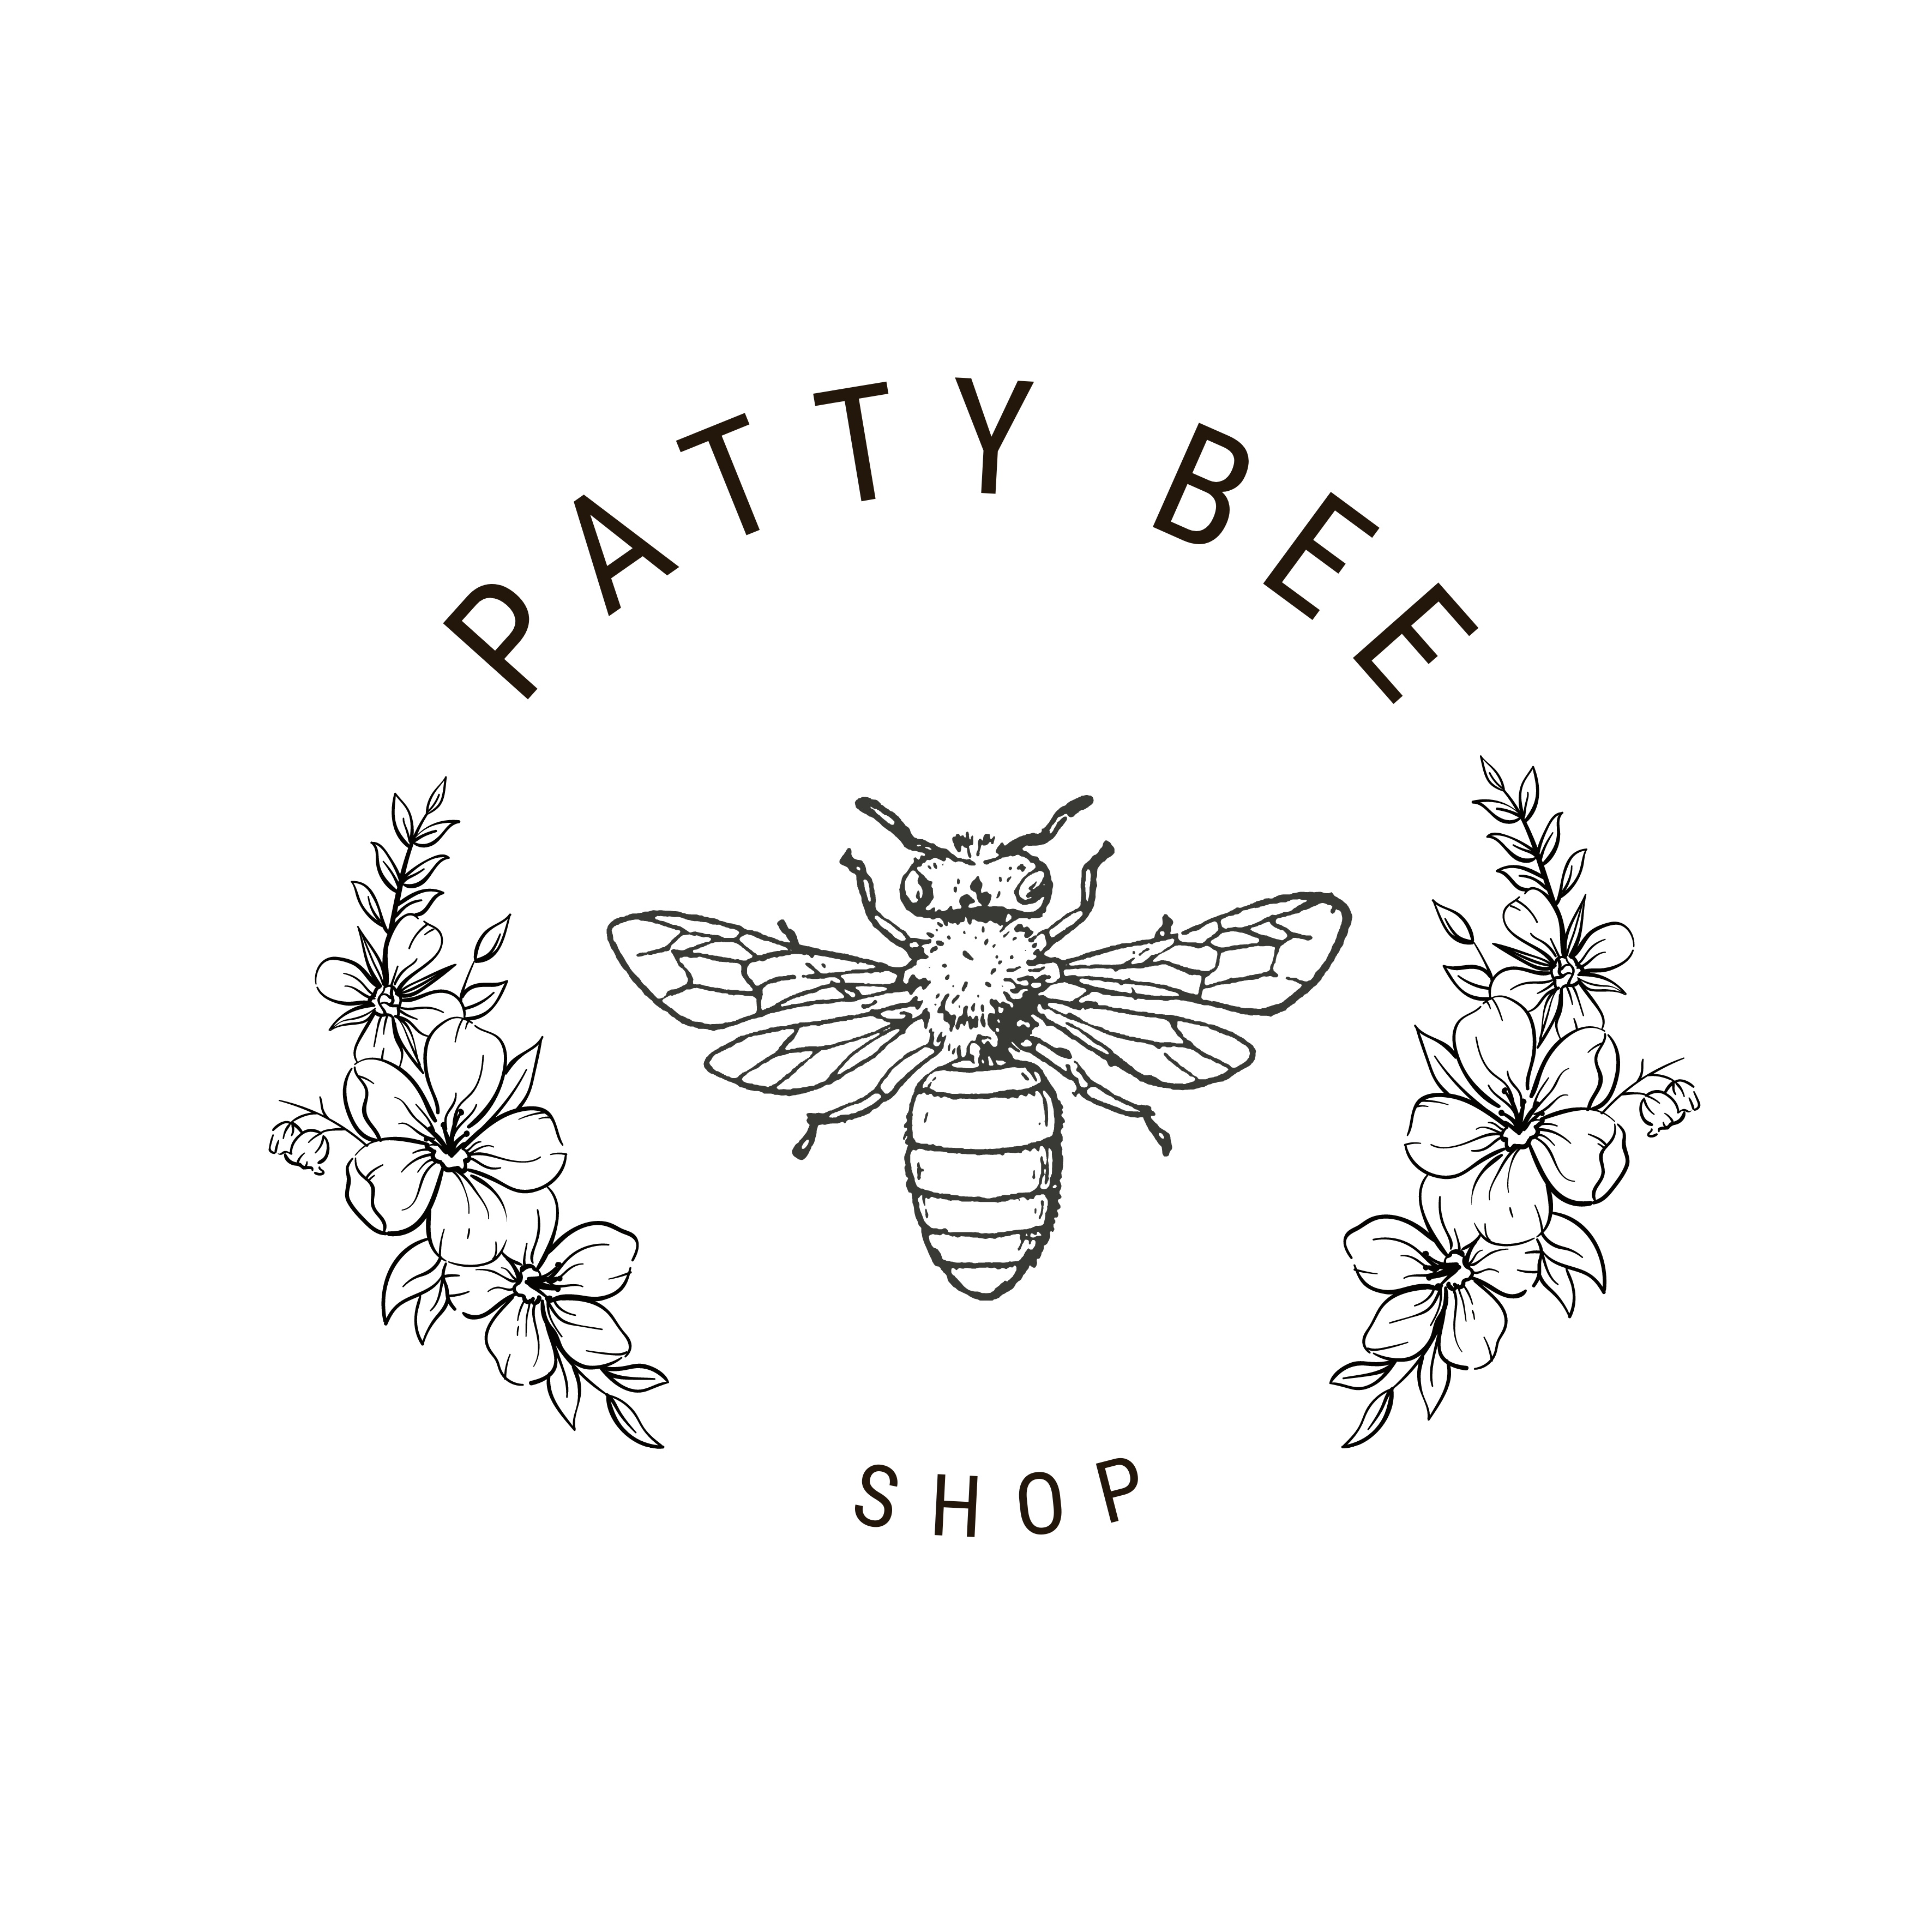 The Patty Bee Shop – pattybeeshop